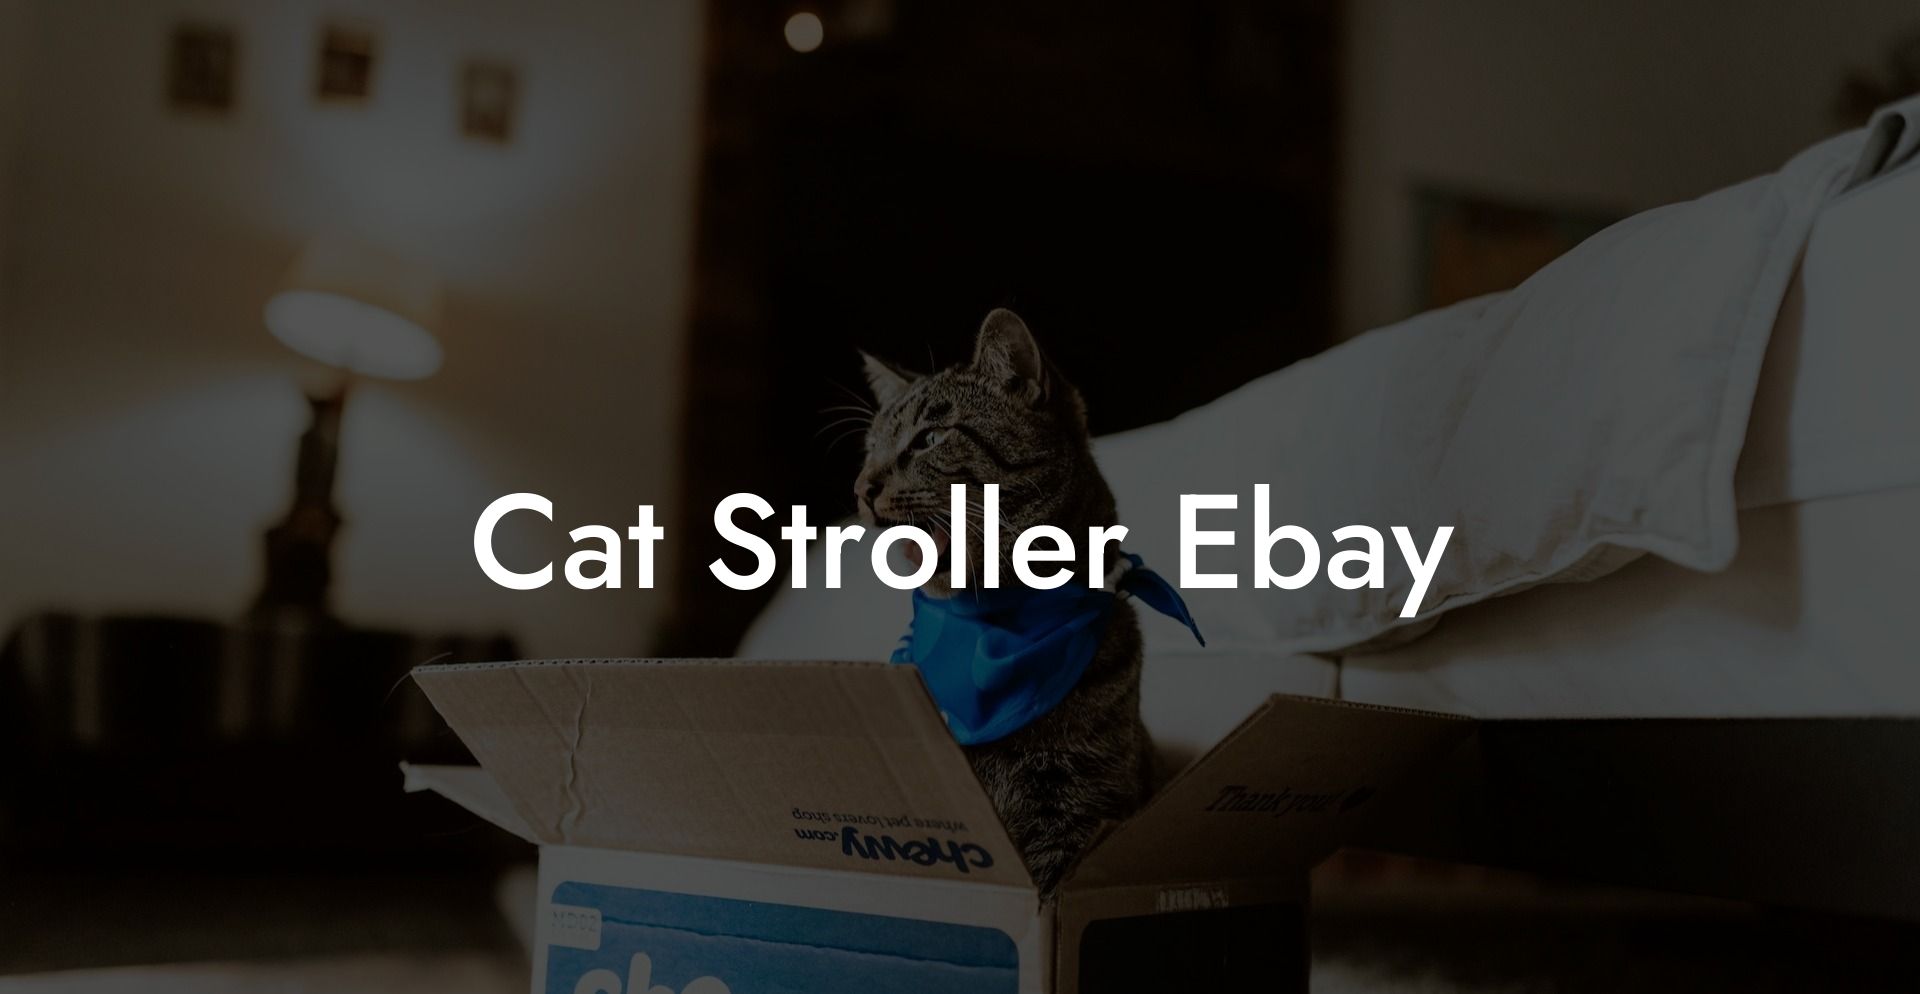 Cat Stroller Ebay